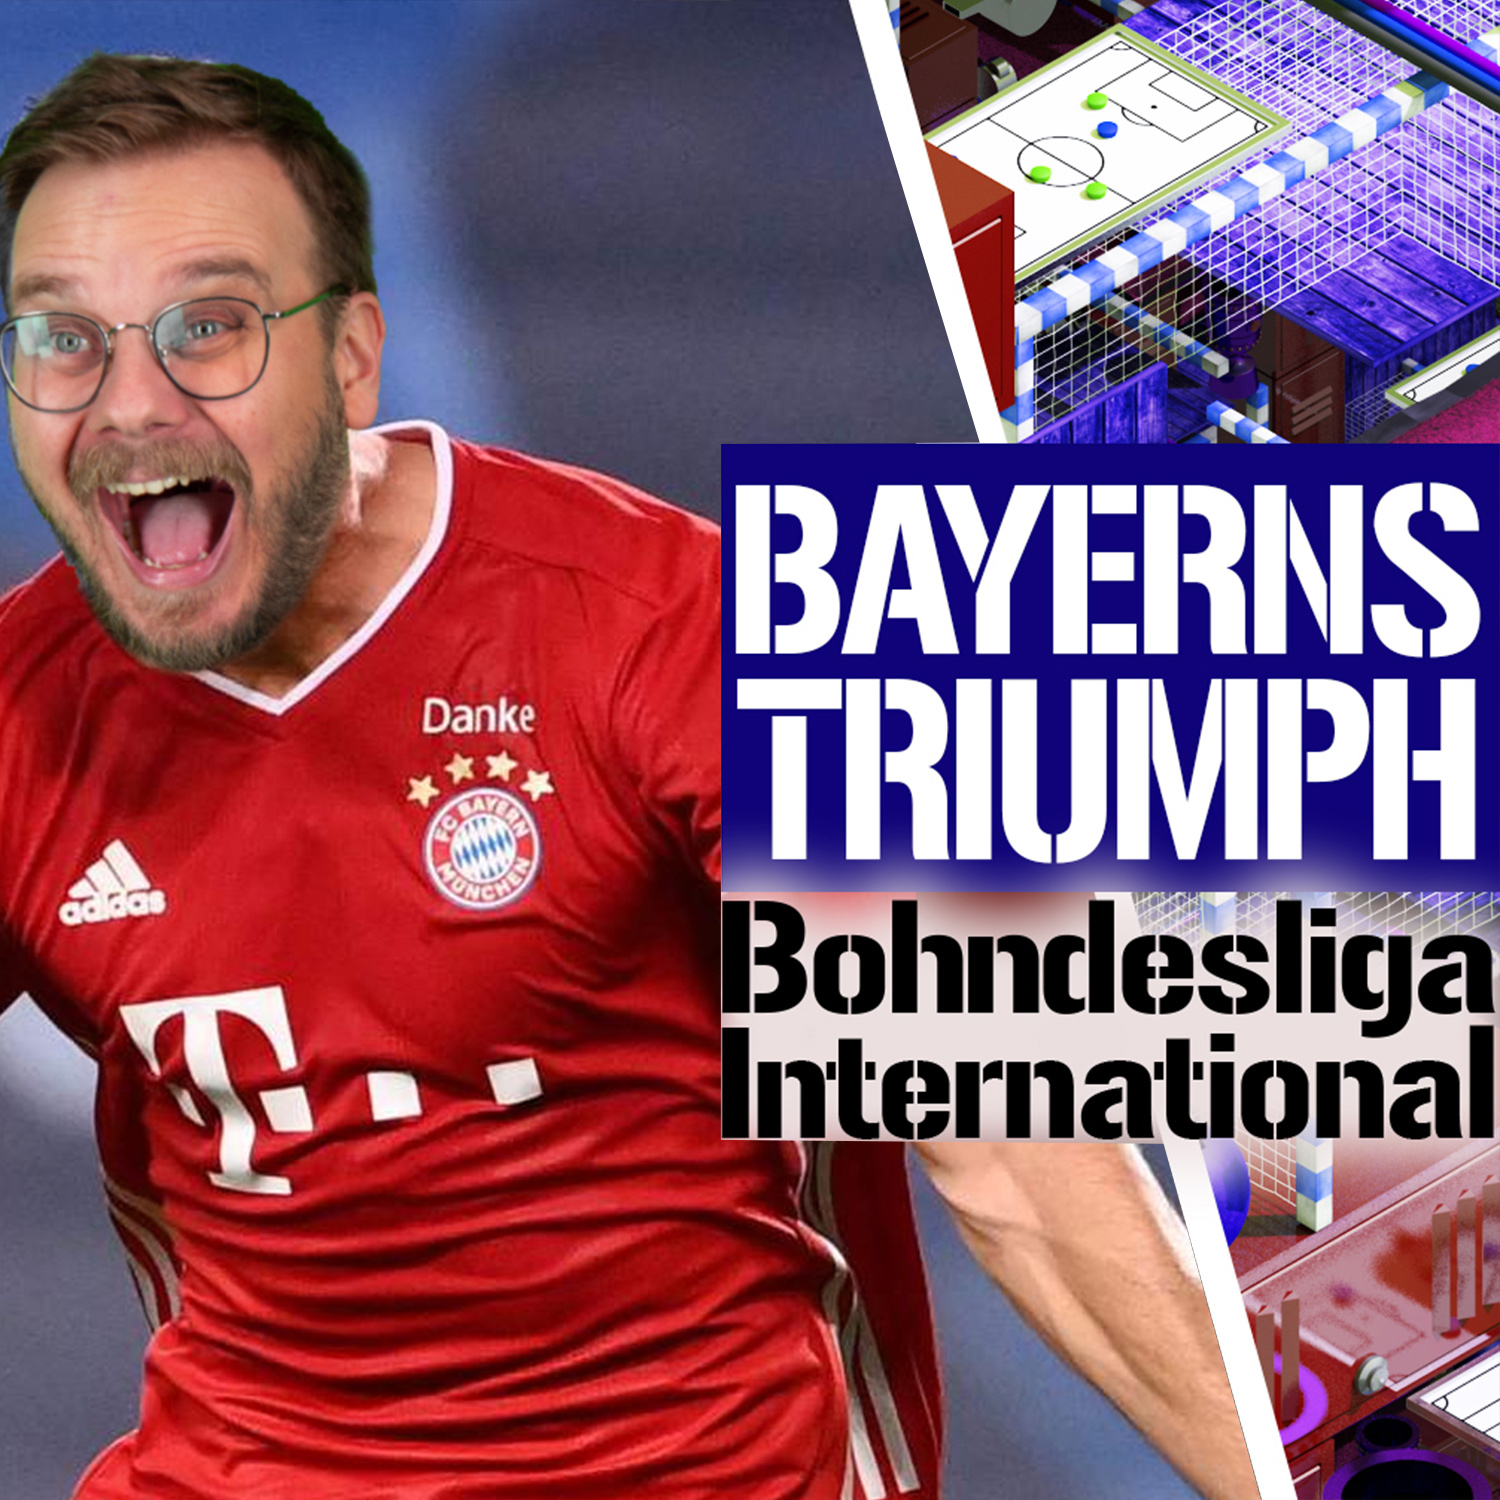 Bayerns Champions League Triumph & Fazit zum CL-Turnier